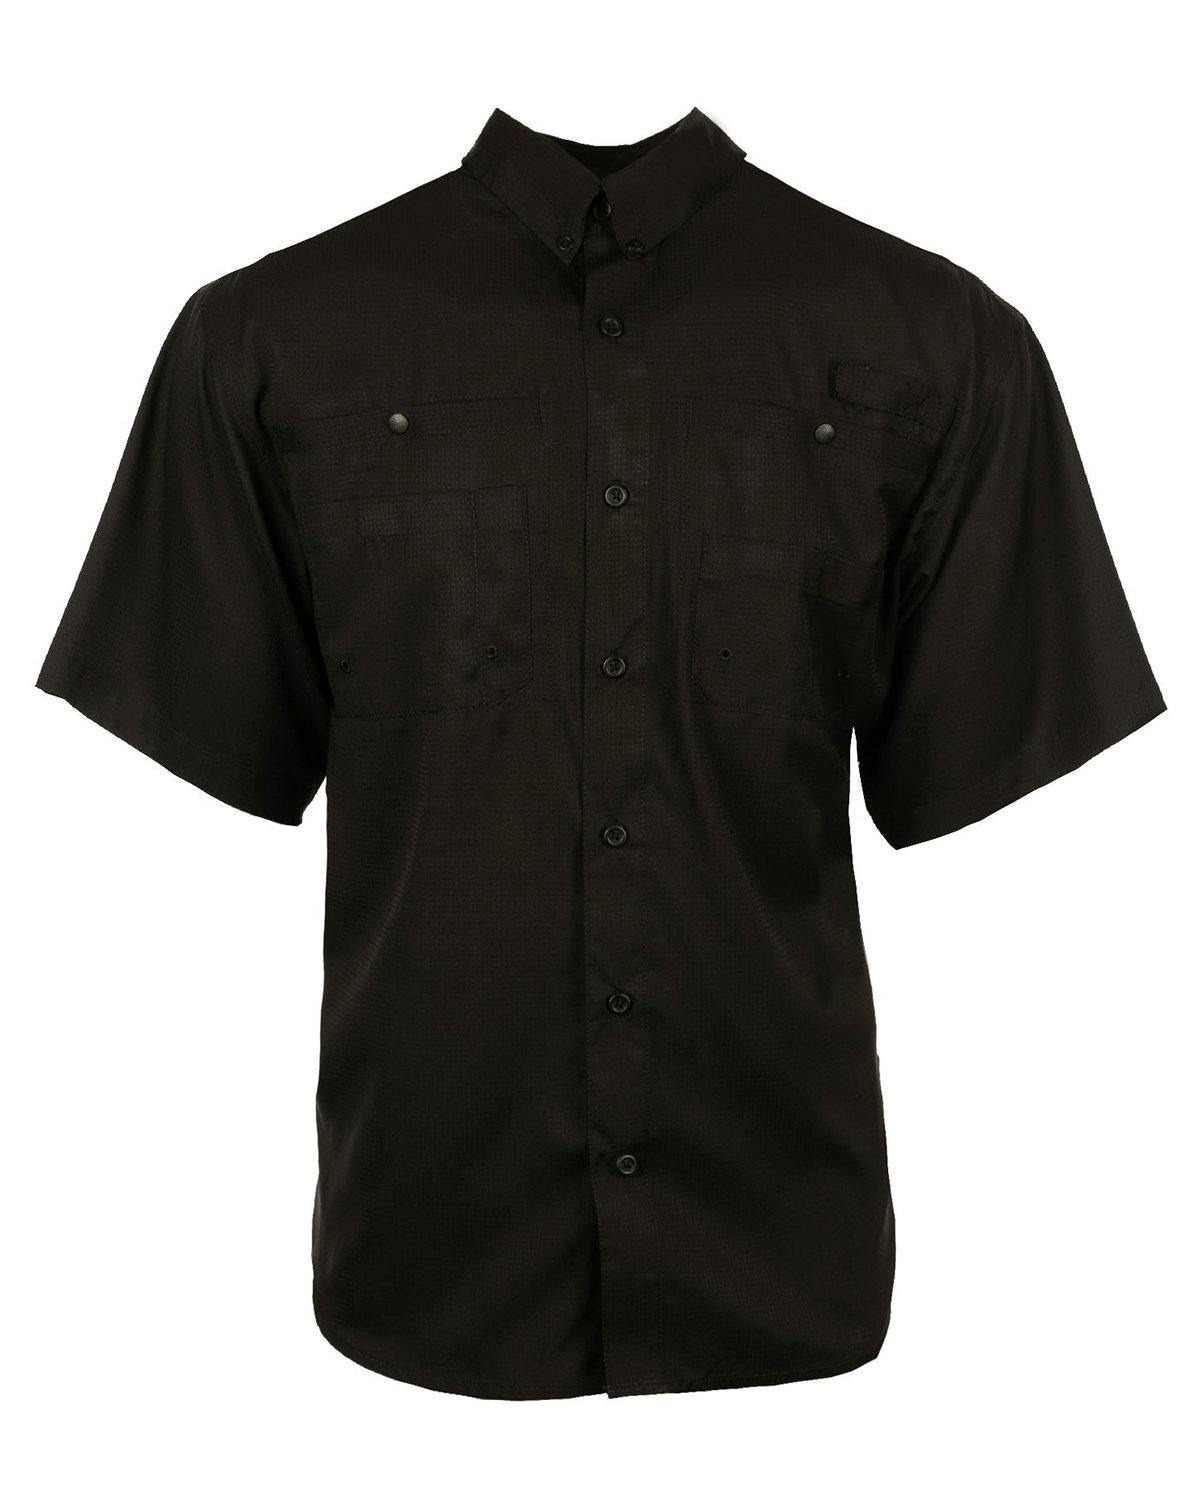 Image for Men's Functional Short-Sleeve Fishing Shirt